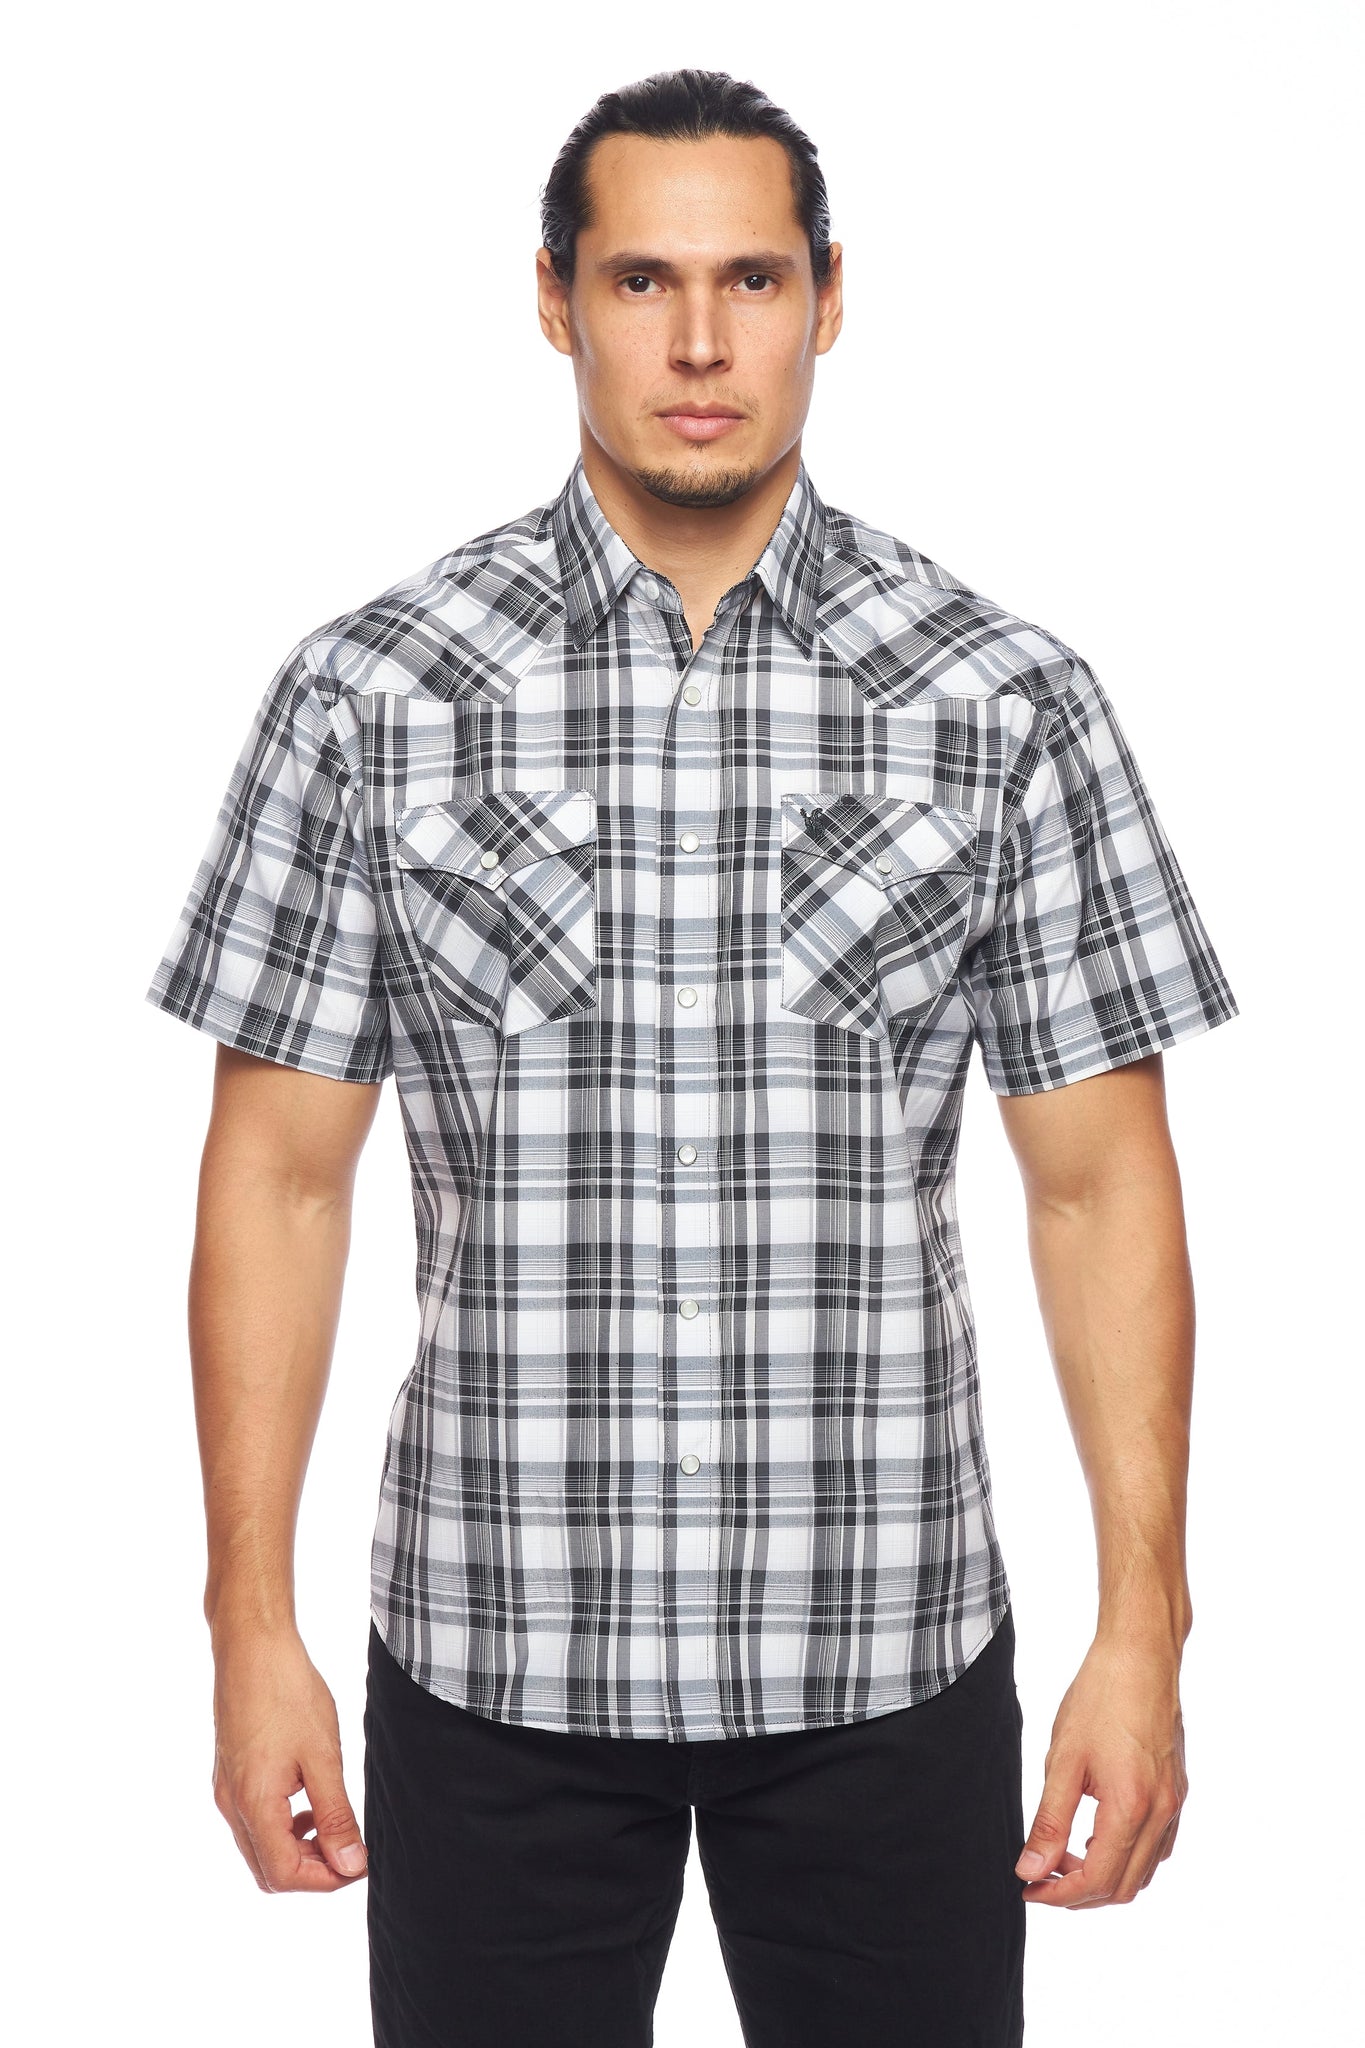 Men's Western Short Sleeve Pearl Snaps Plaid Shirt -PS400S-472